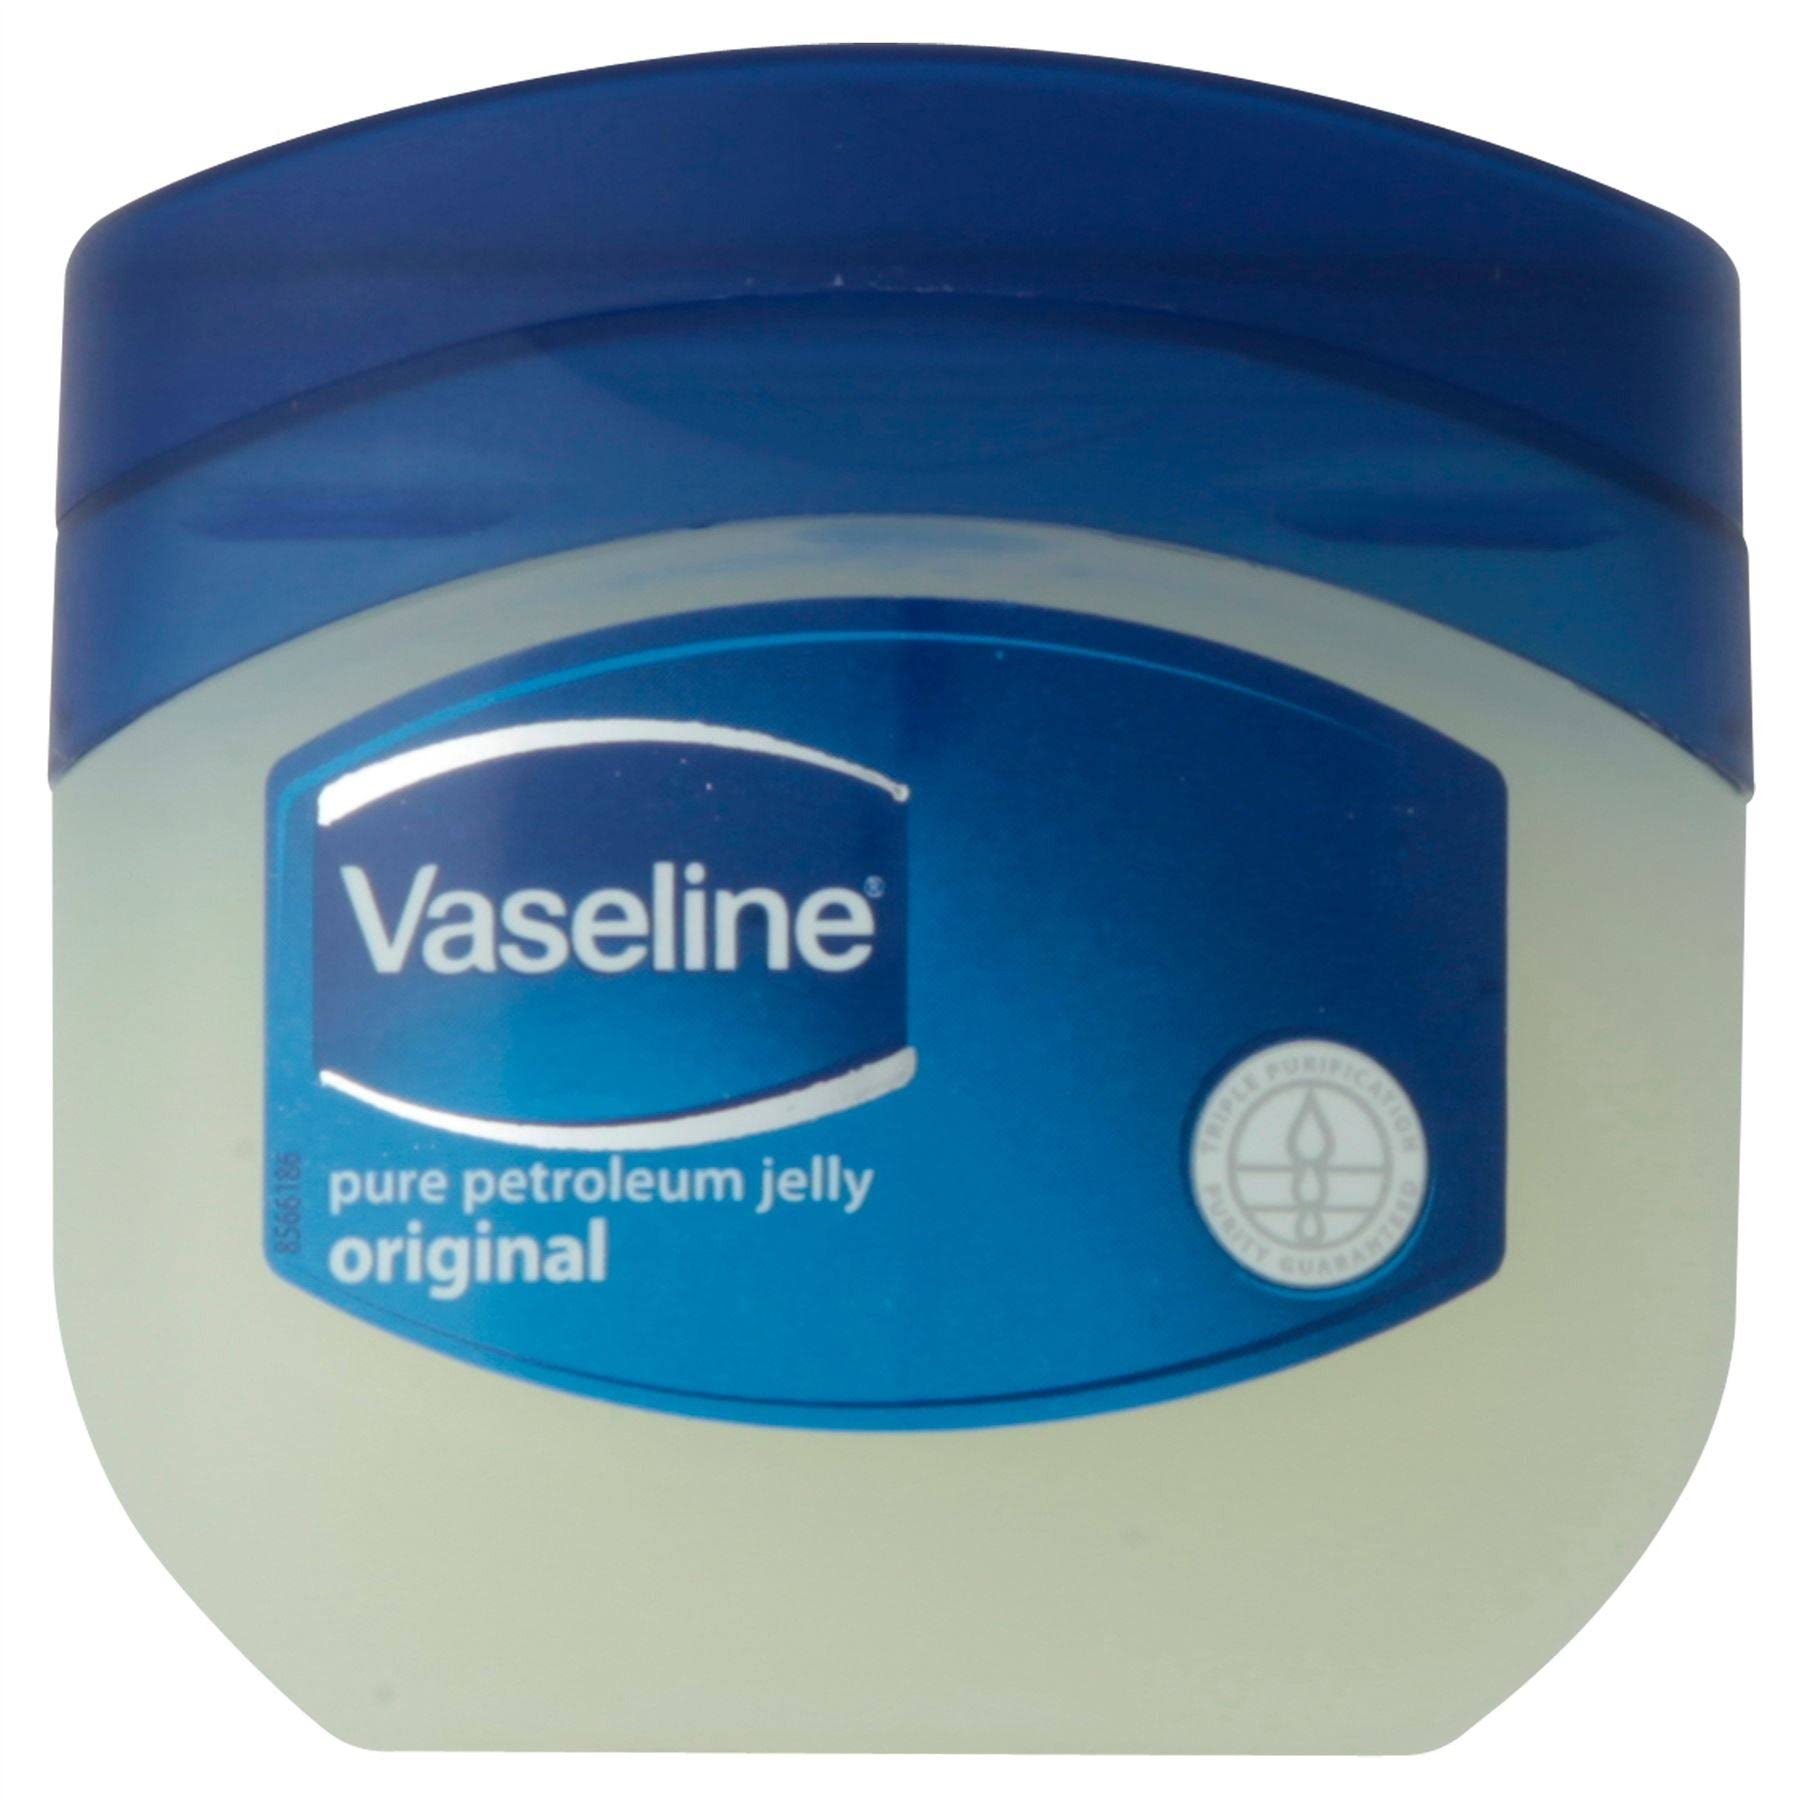 Vaseline Pure Petroleum Jelly - Original, 50ml